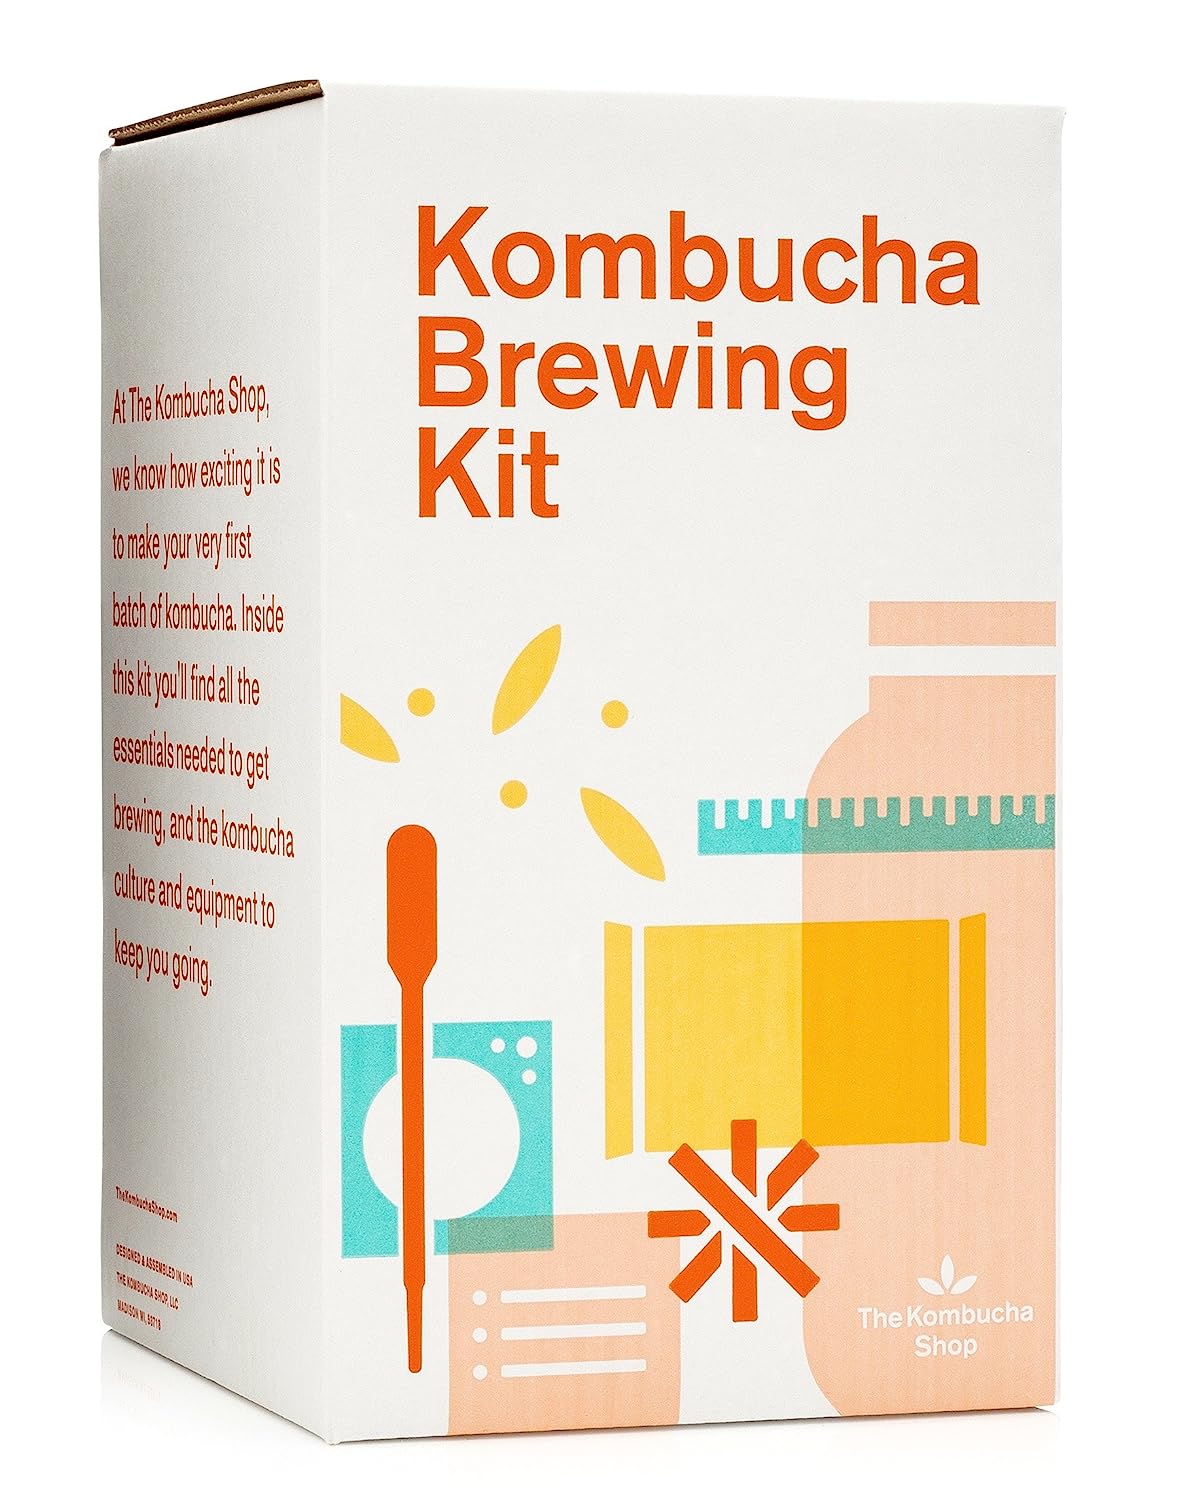 The Kombucha Shop <span class="text-organic-green">Organic</span> Kombucha Starter Kit